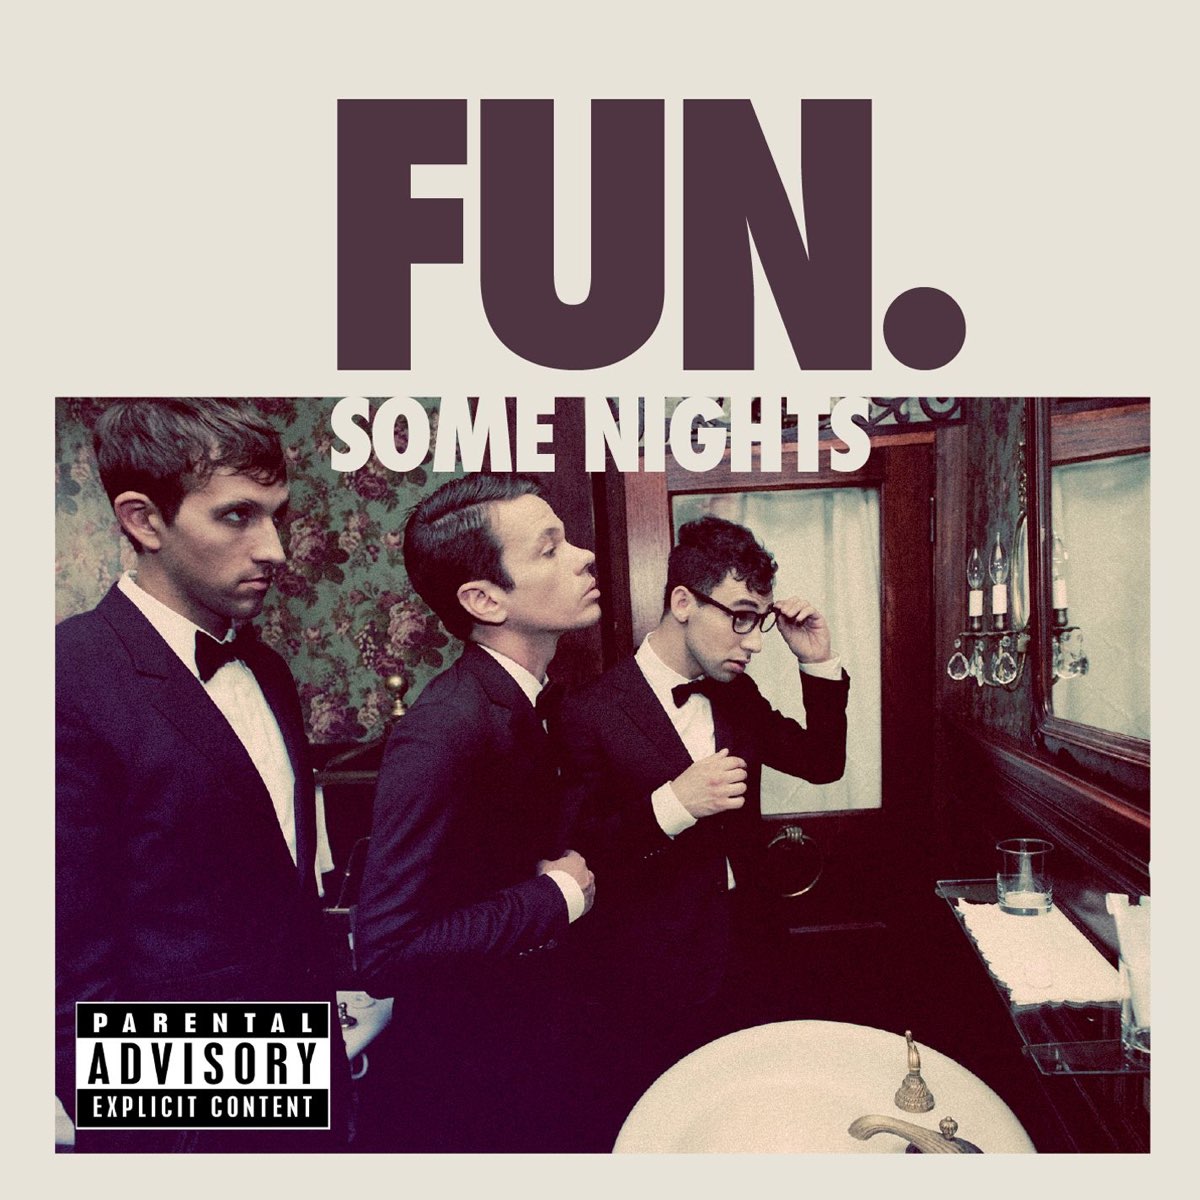 Some Nights (Single Cover) - Fun (Music Band) Photo (37267820) - Fanpop